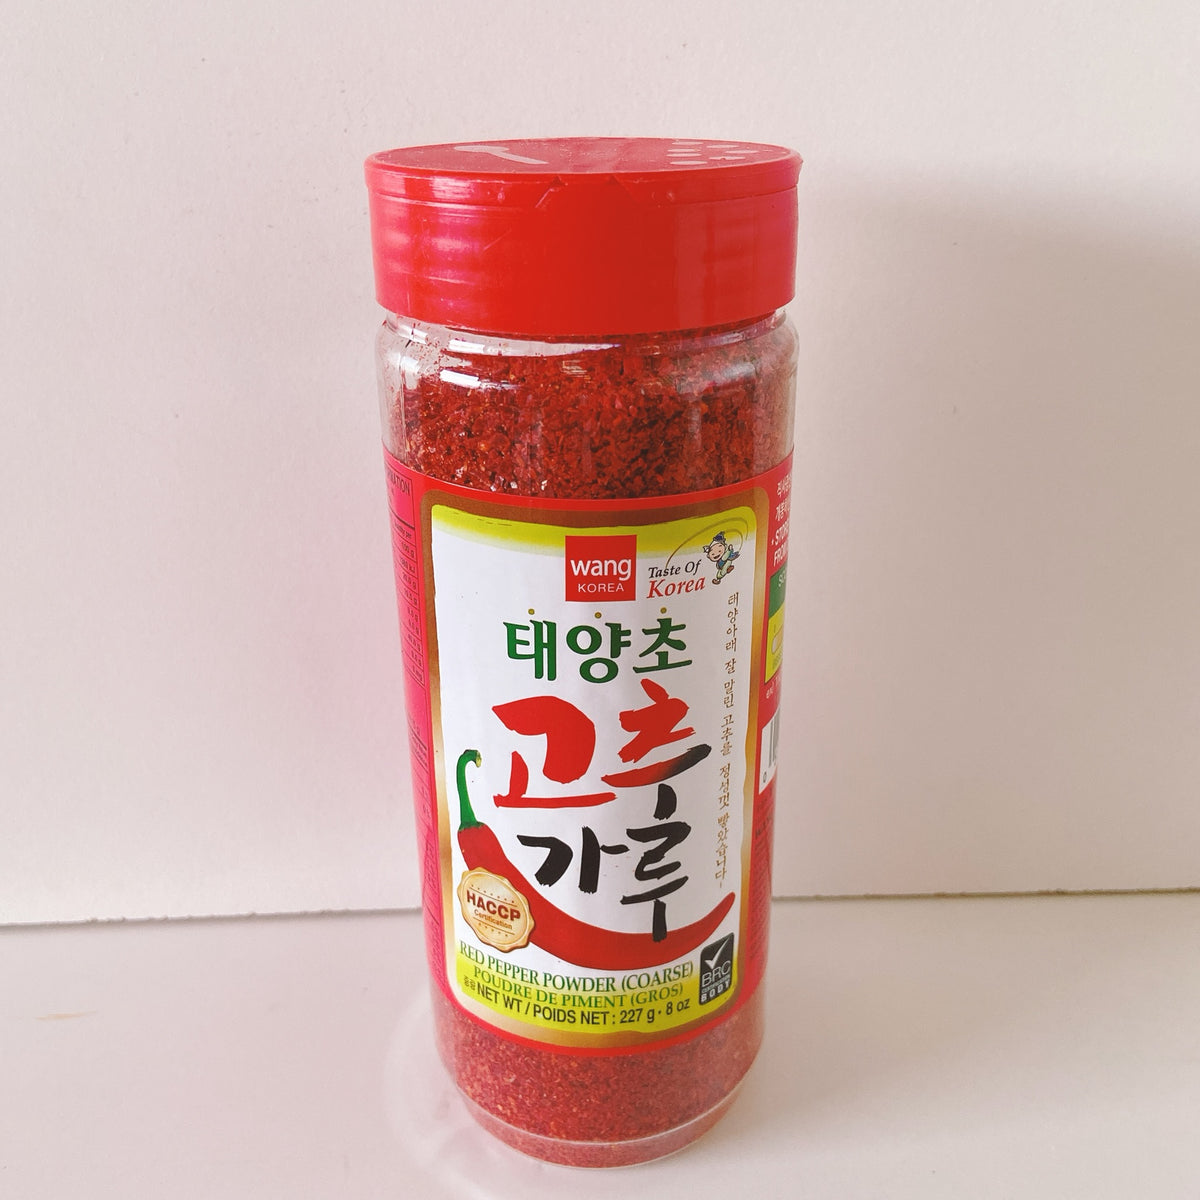 Wang Red Pepper Powder (Coarse)